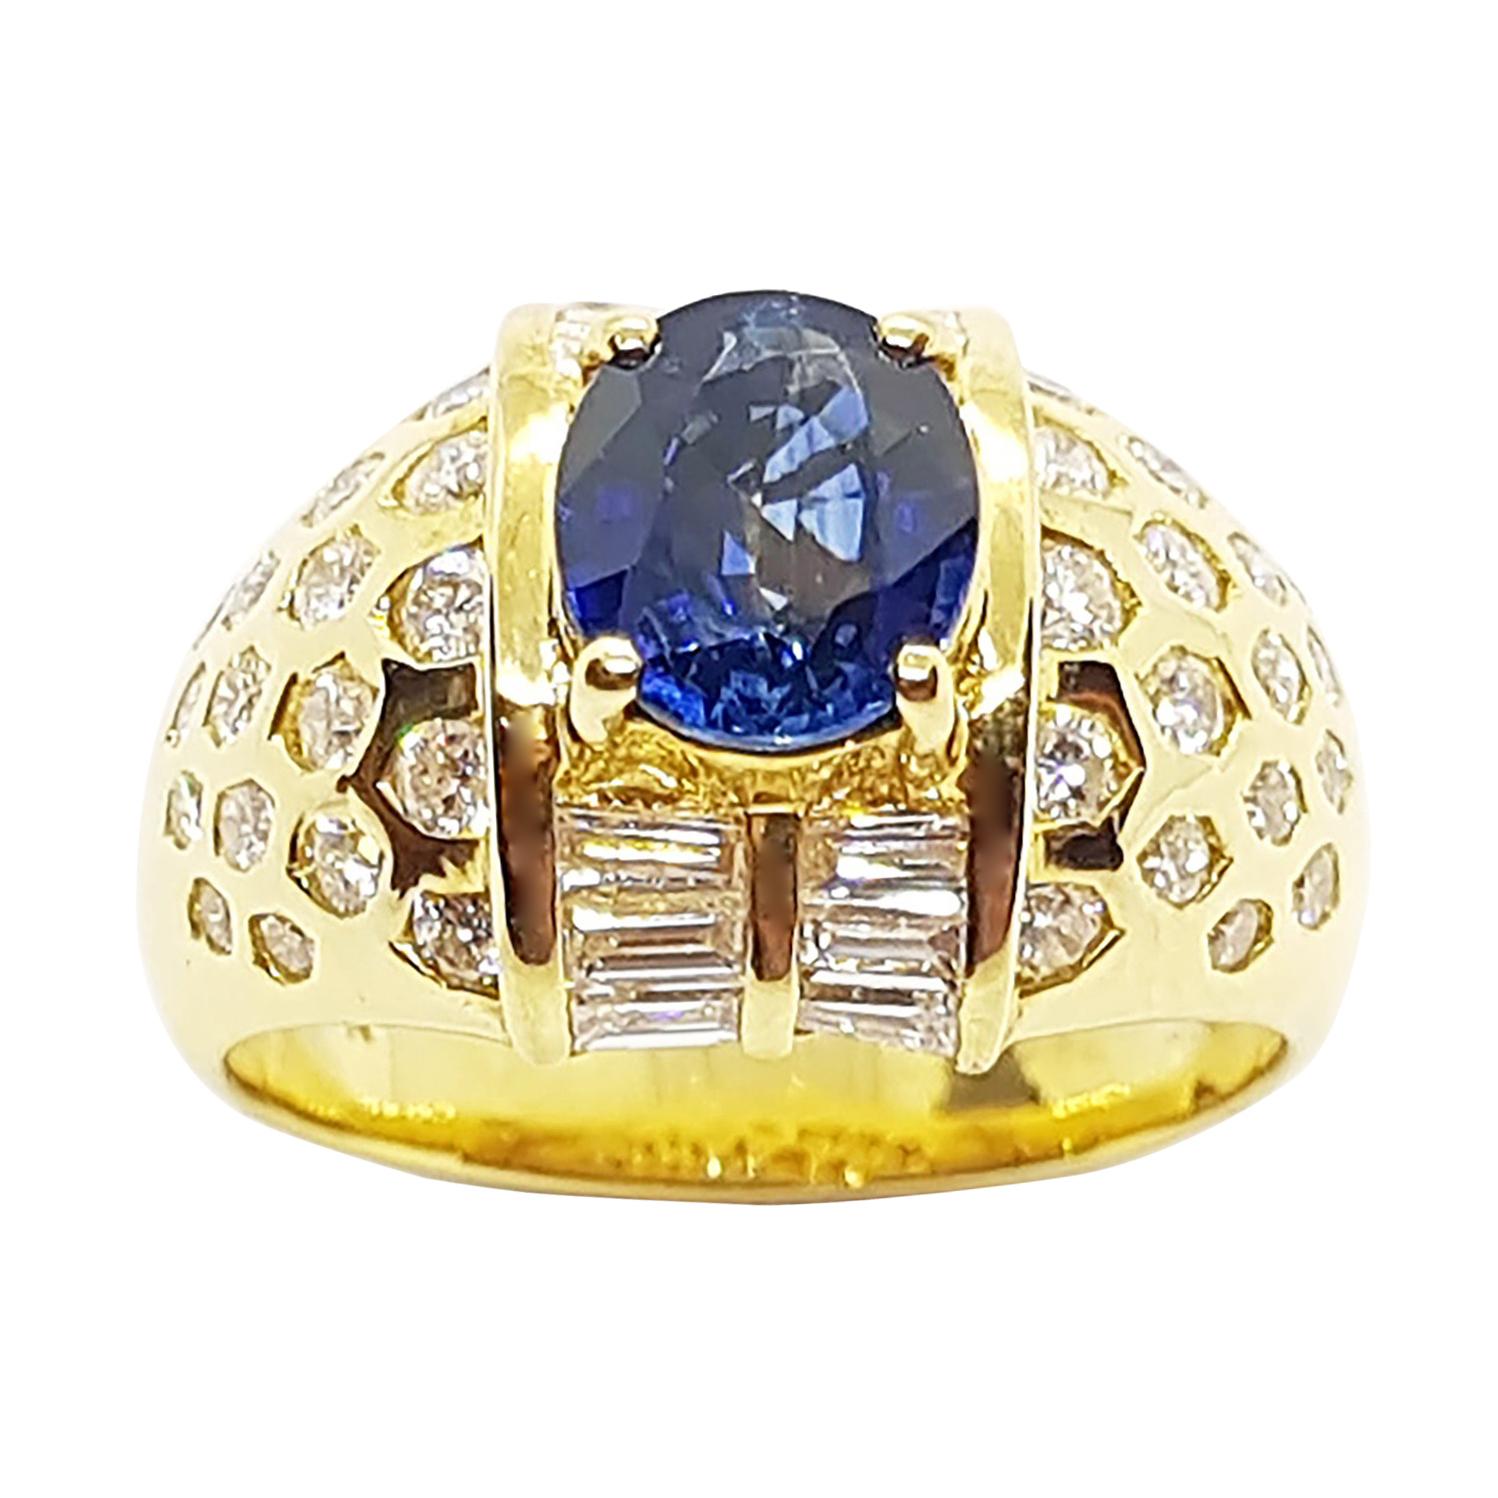 Blue Sapphire with Diamond Ring Set in 18 Karat Gold Settings